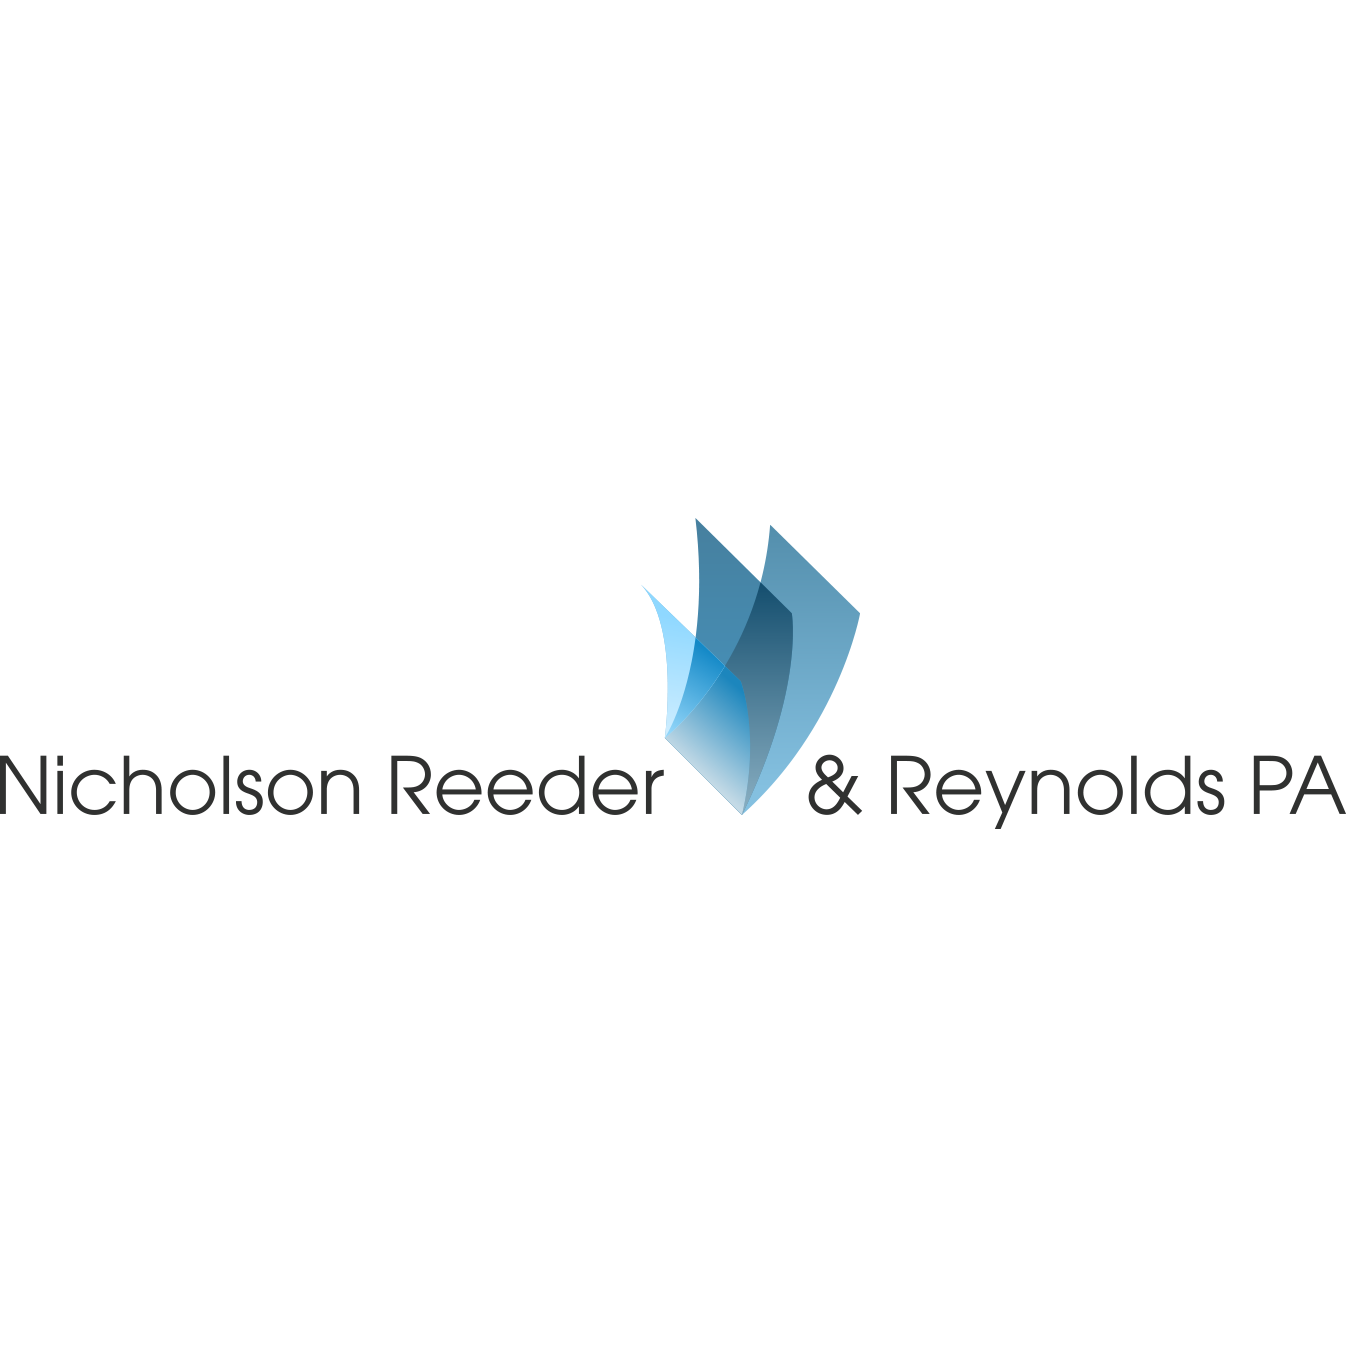 Nicholson Reeder & Reynolds PA